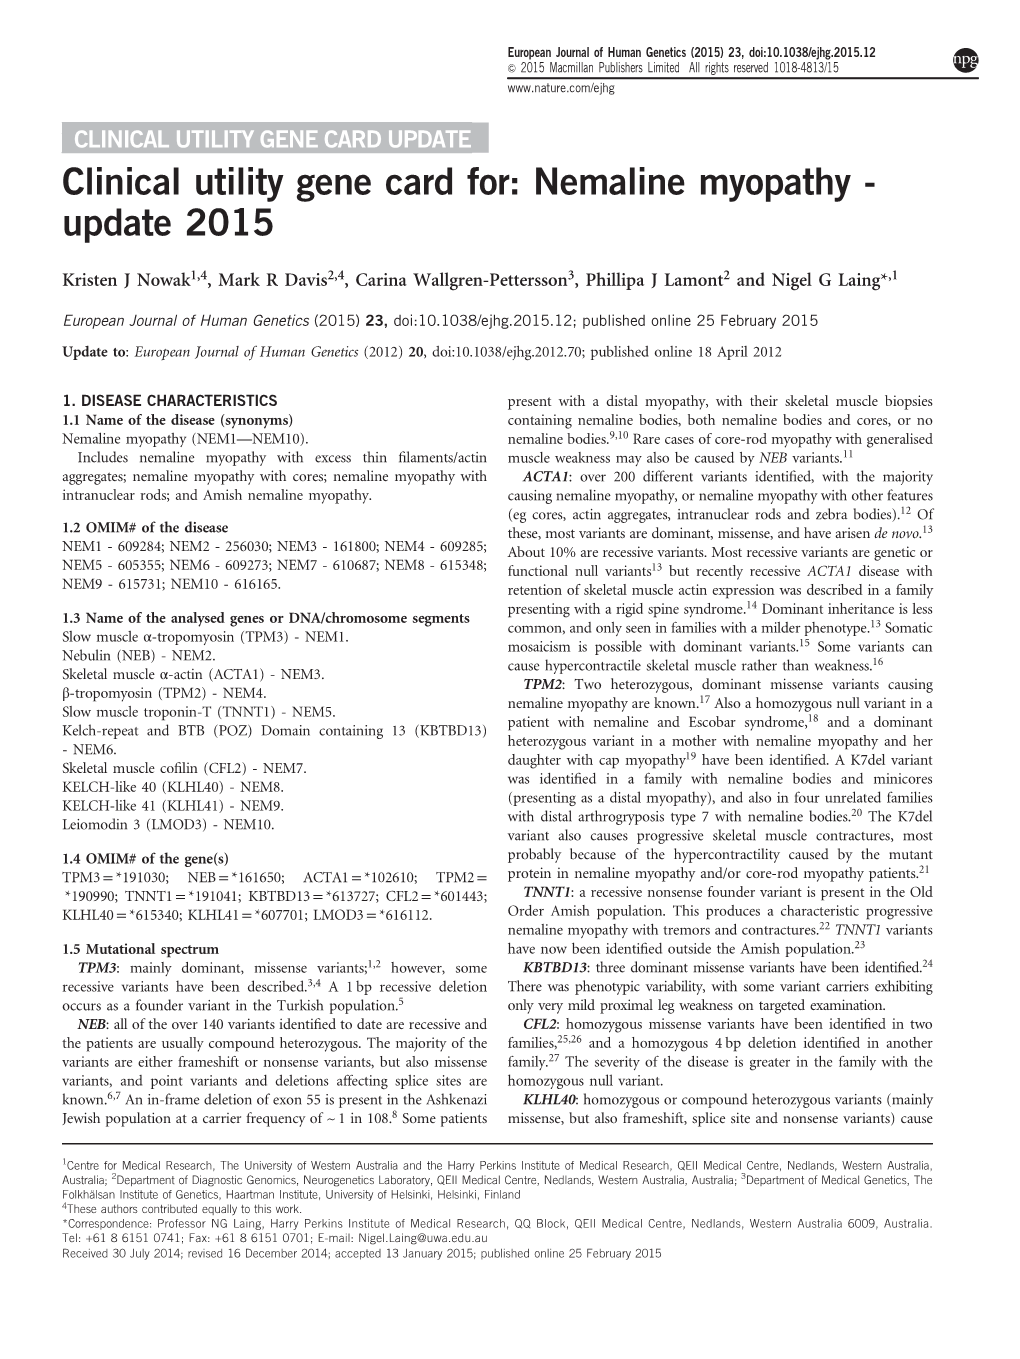 Clinical Utility Gene Card For: Nemaline Myopathy - Update 2015